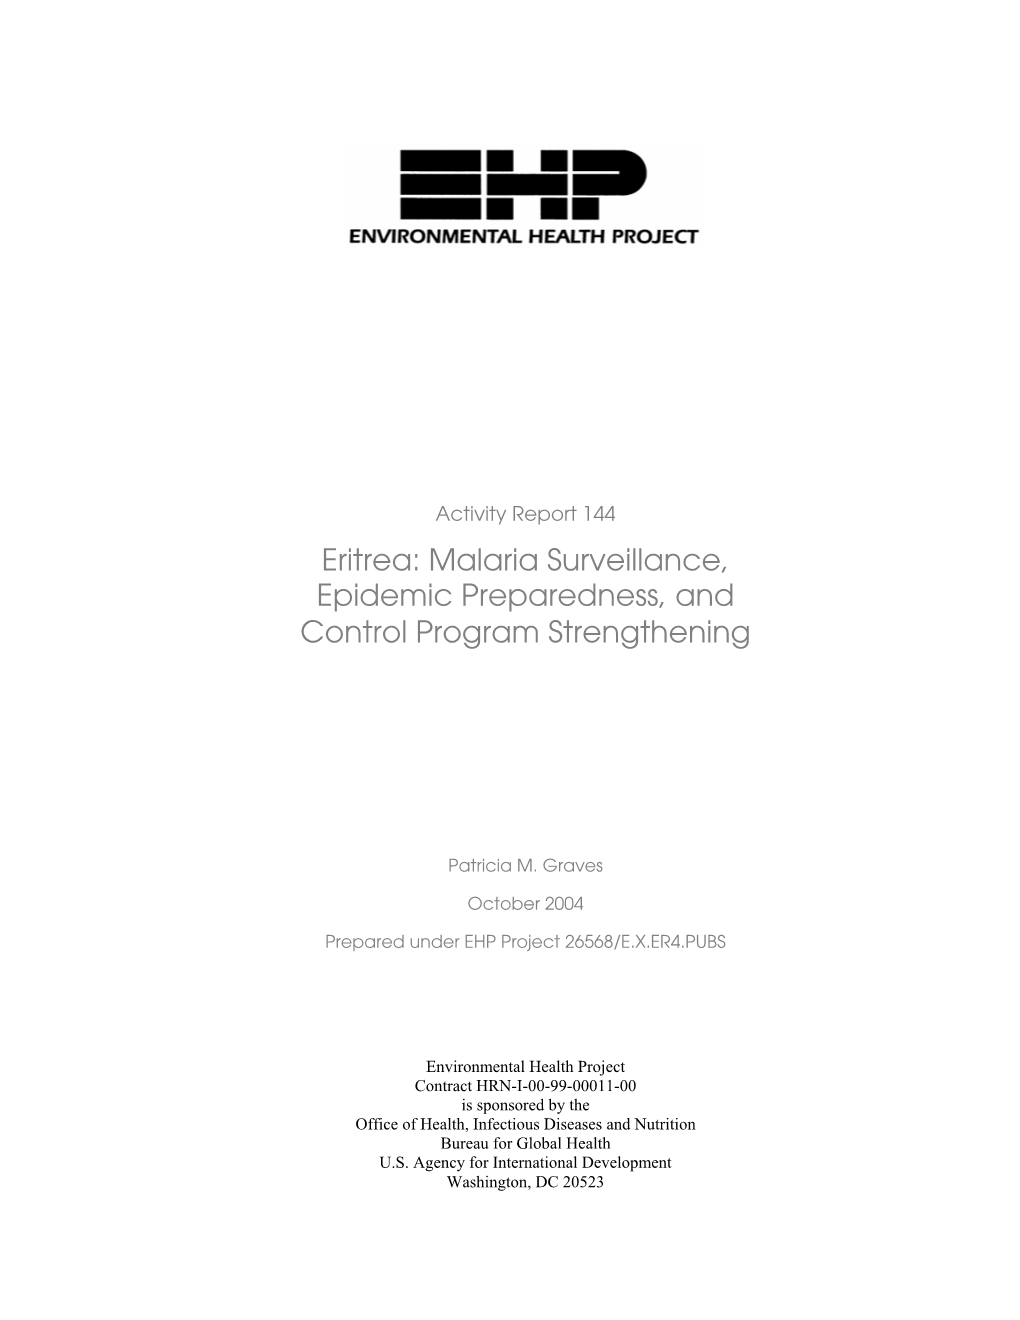 Eritrea: Malaria Surveillance, Epidemic Preparedness, and Control Program Strengthening